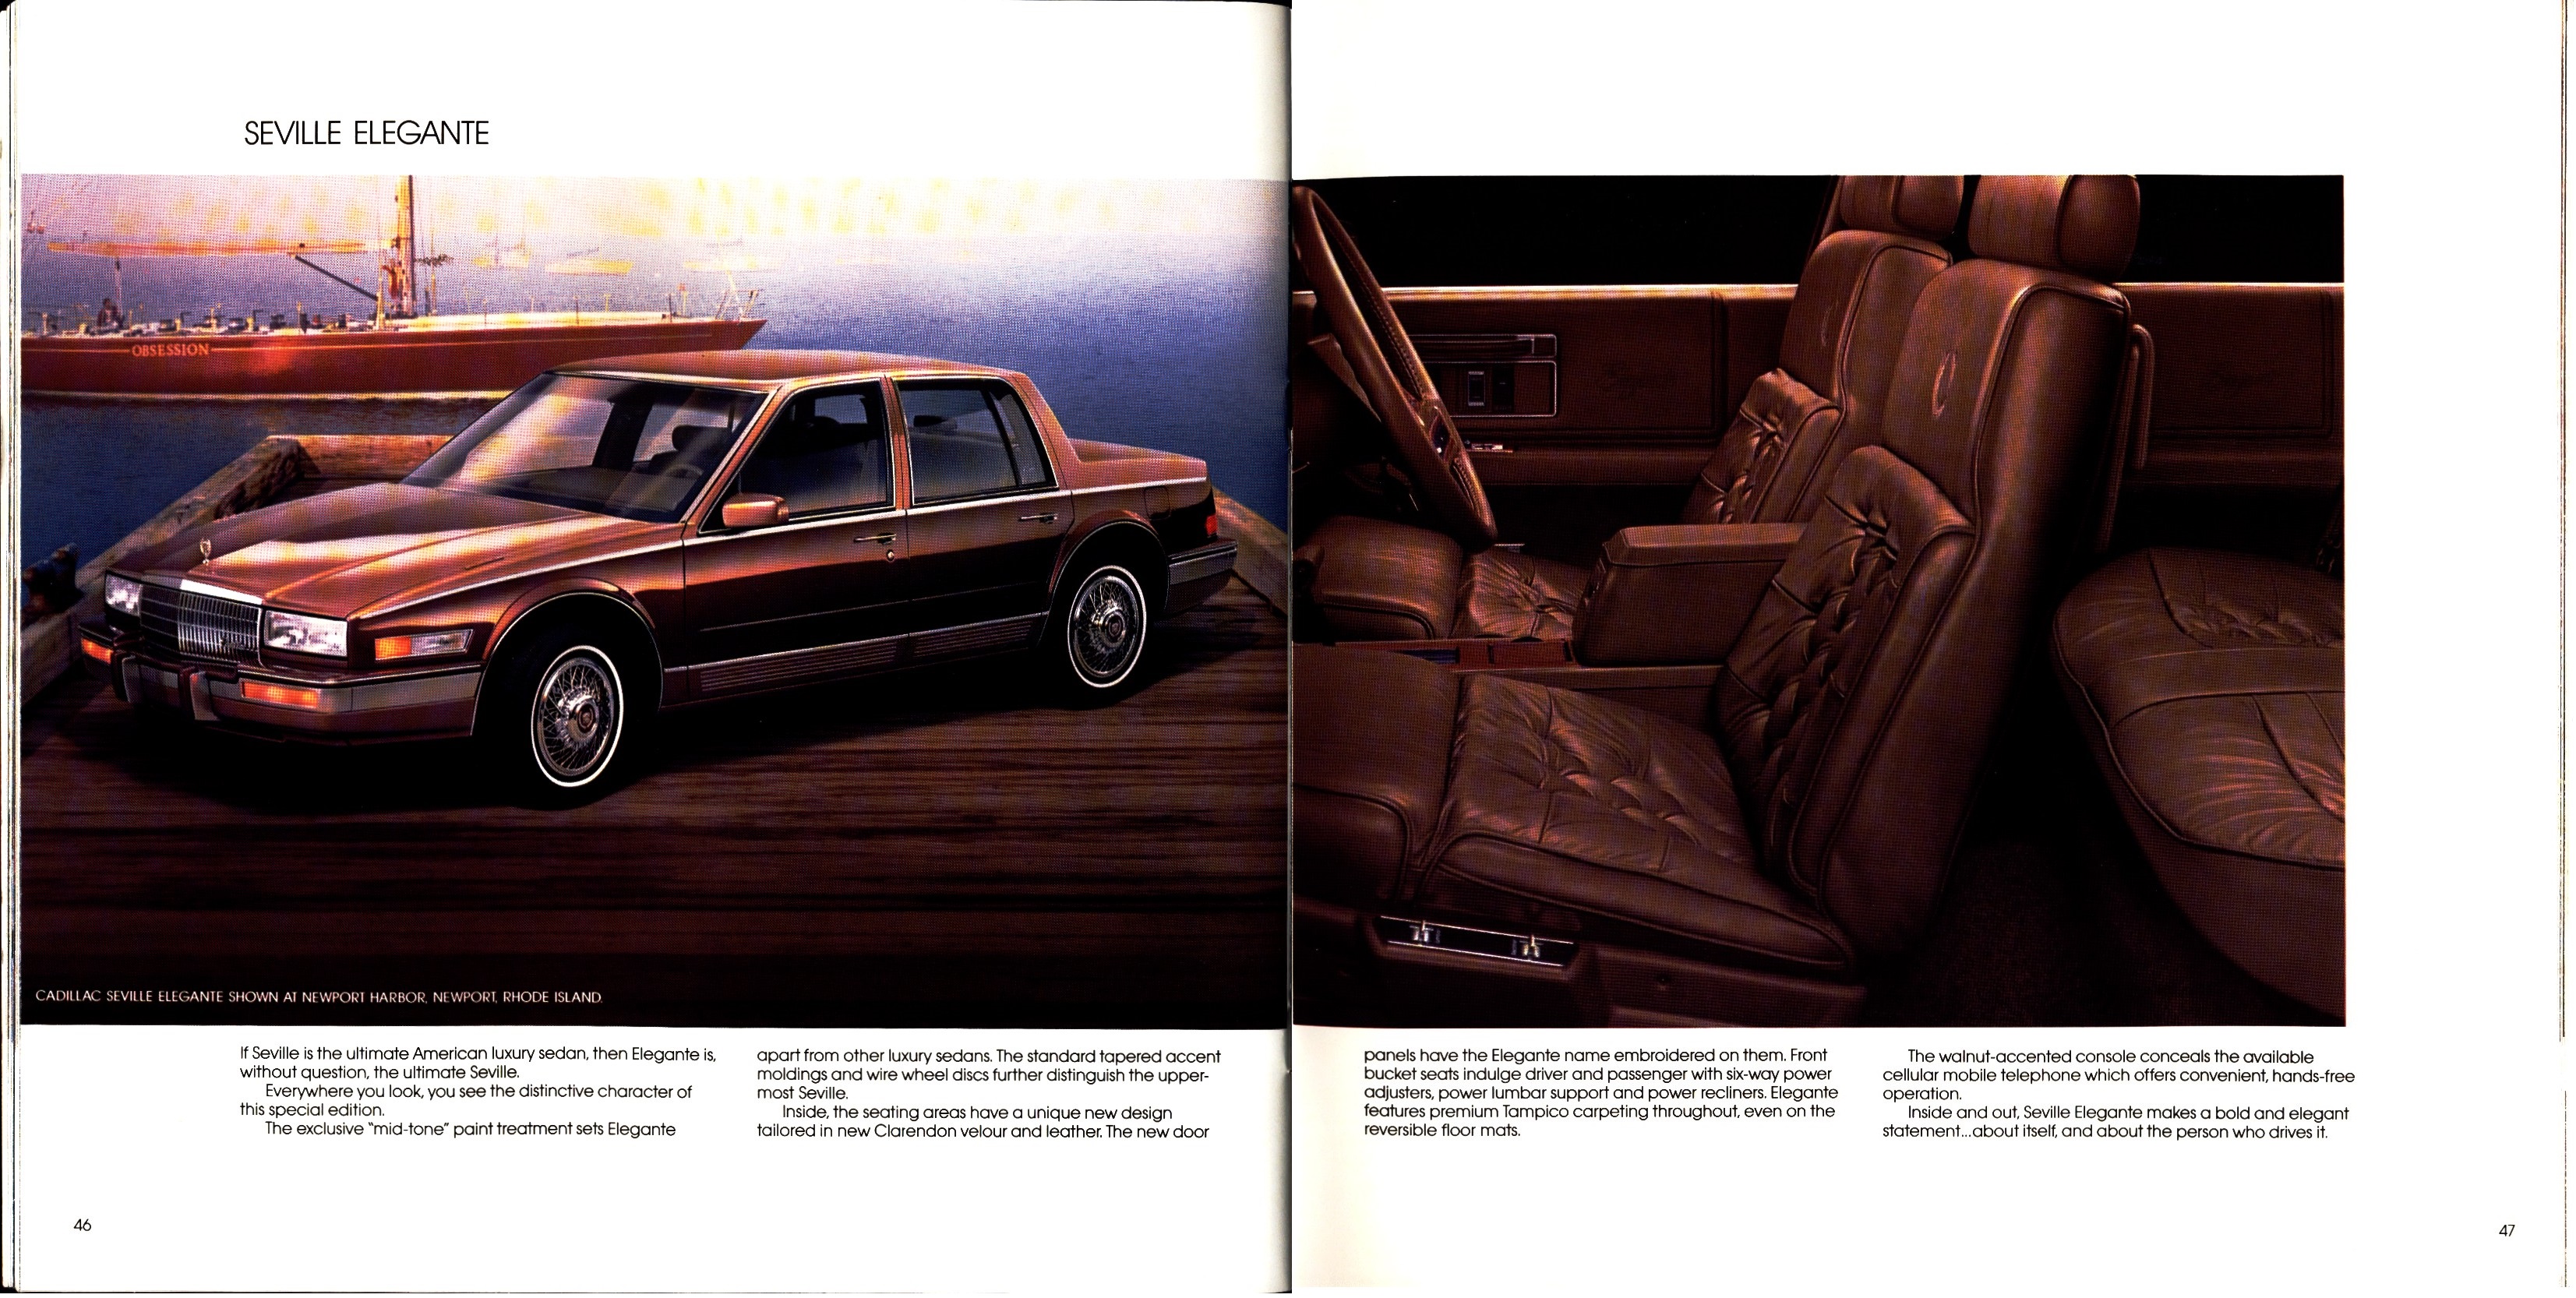 1988 Cadillac Full Line Prestige Brochure 46-47